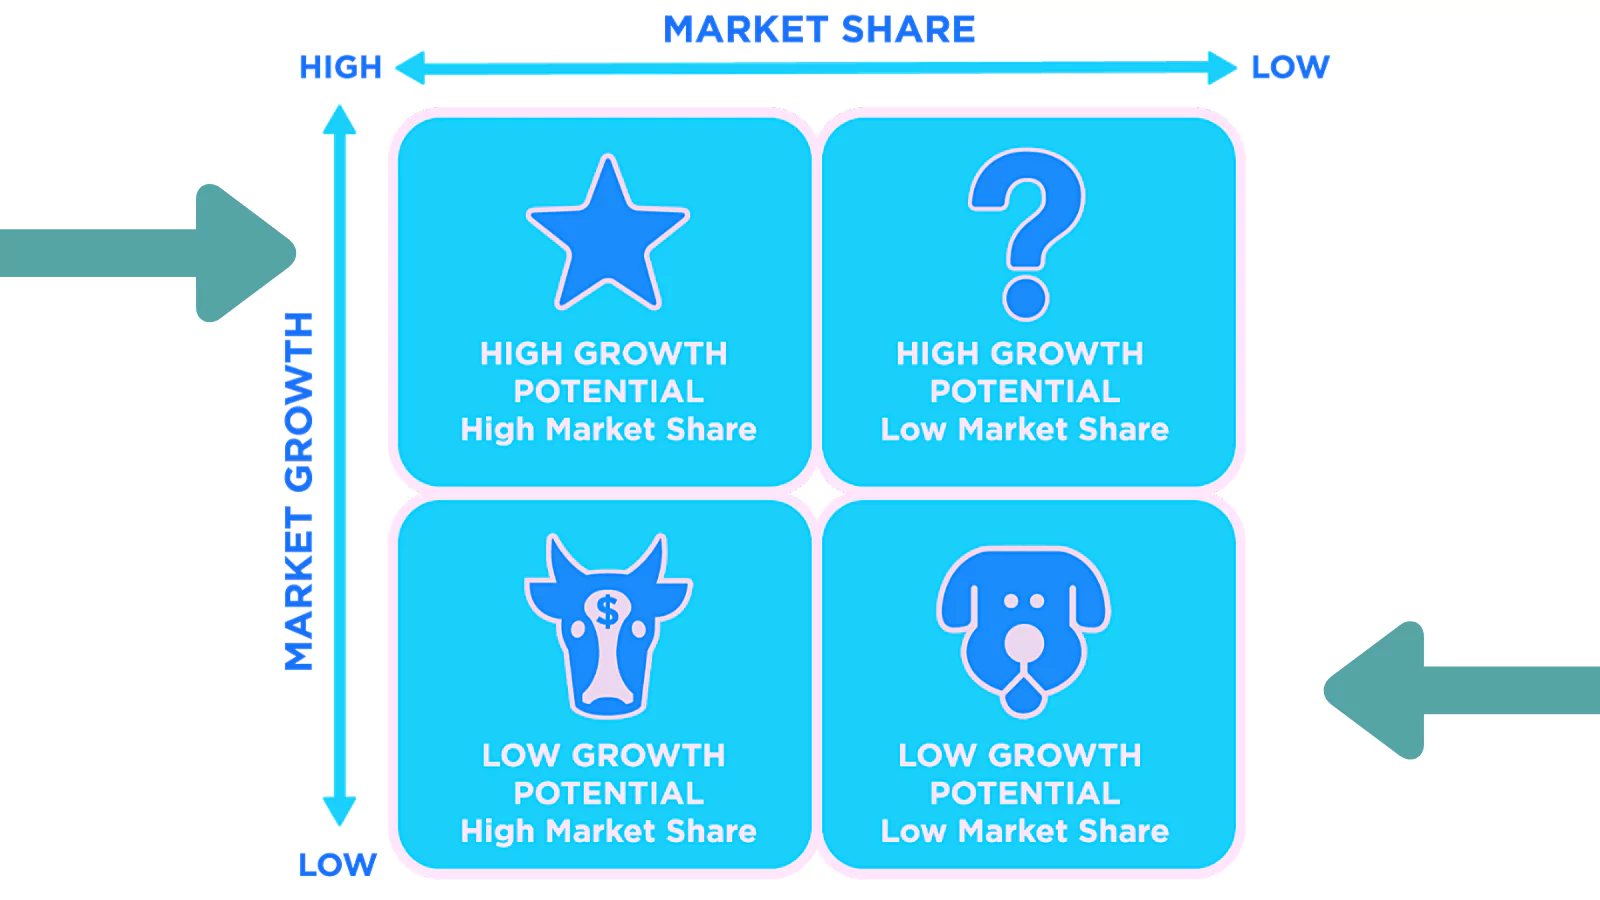 growth-share-matrix